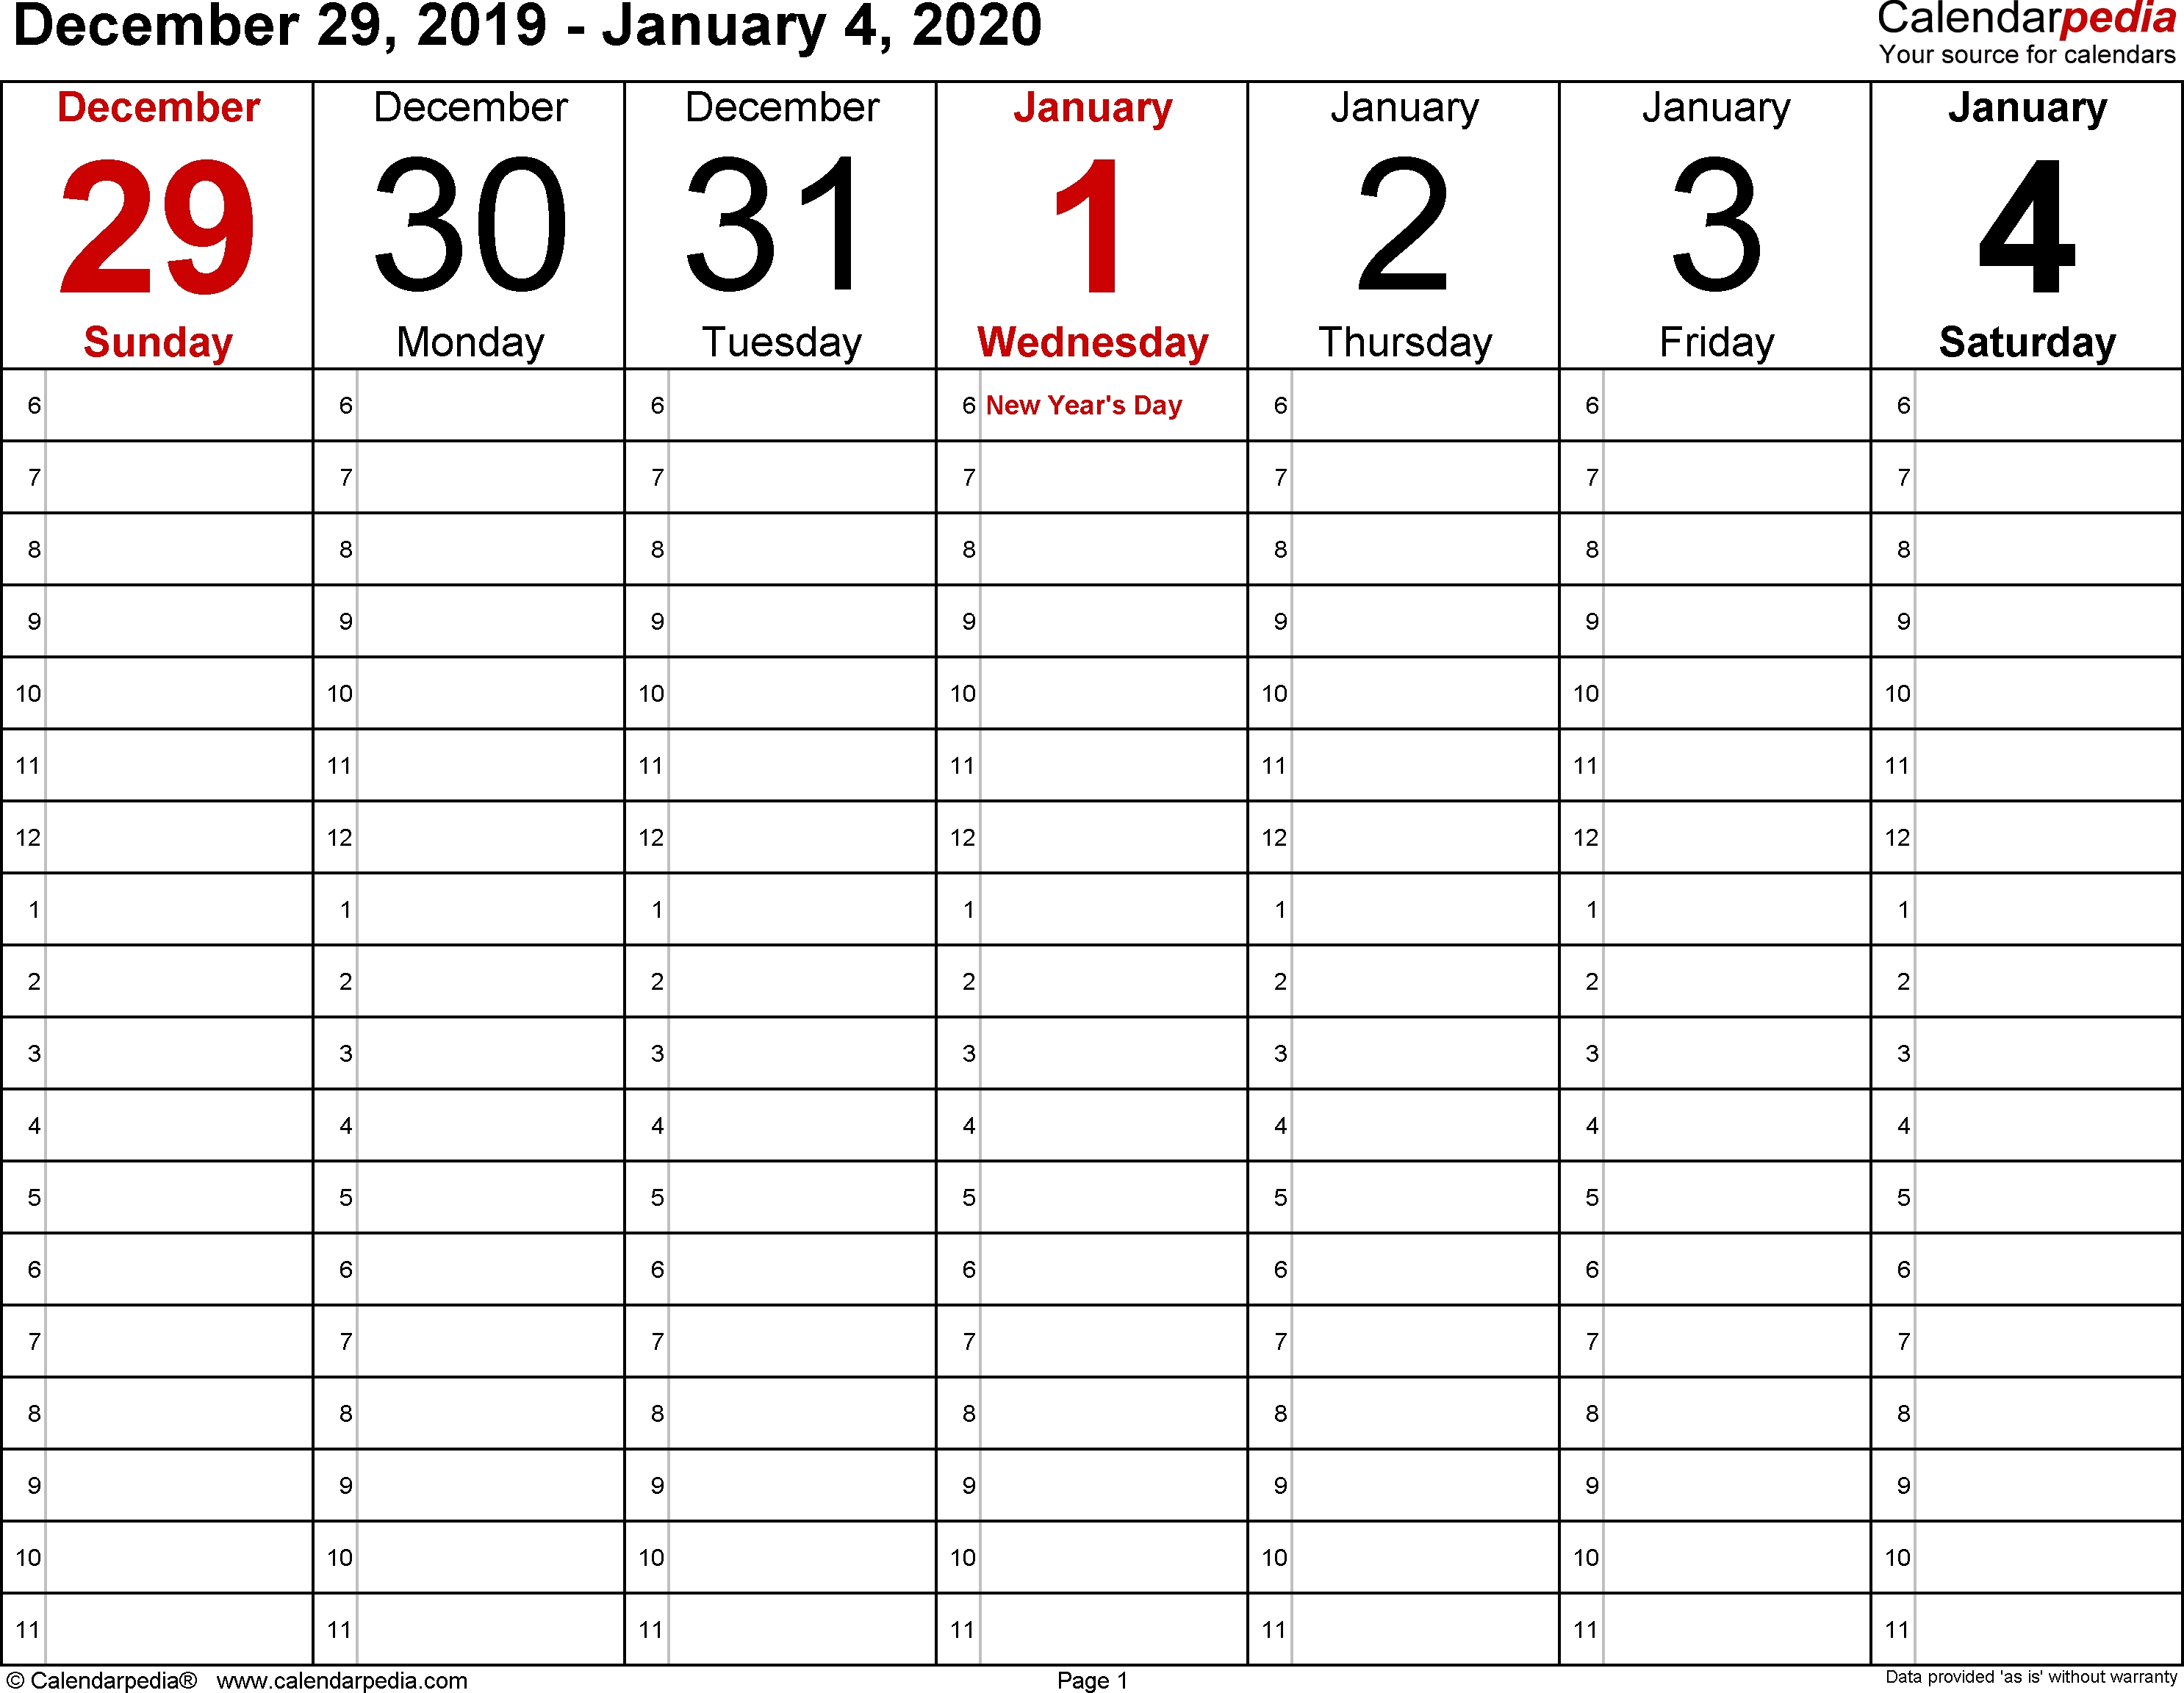 Calendarpedia - Your Source For Calendars December 2020 Calendar Boxing Day